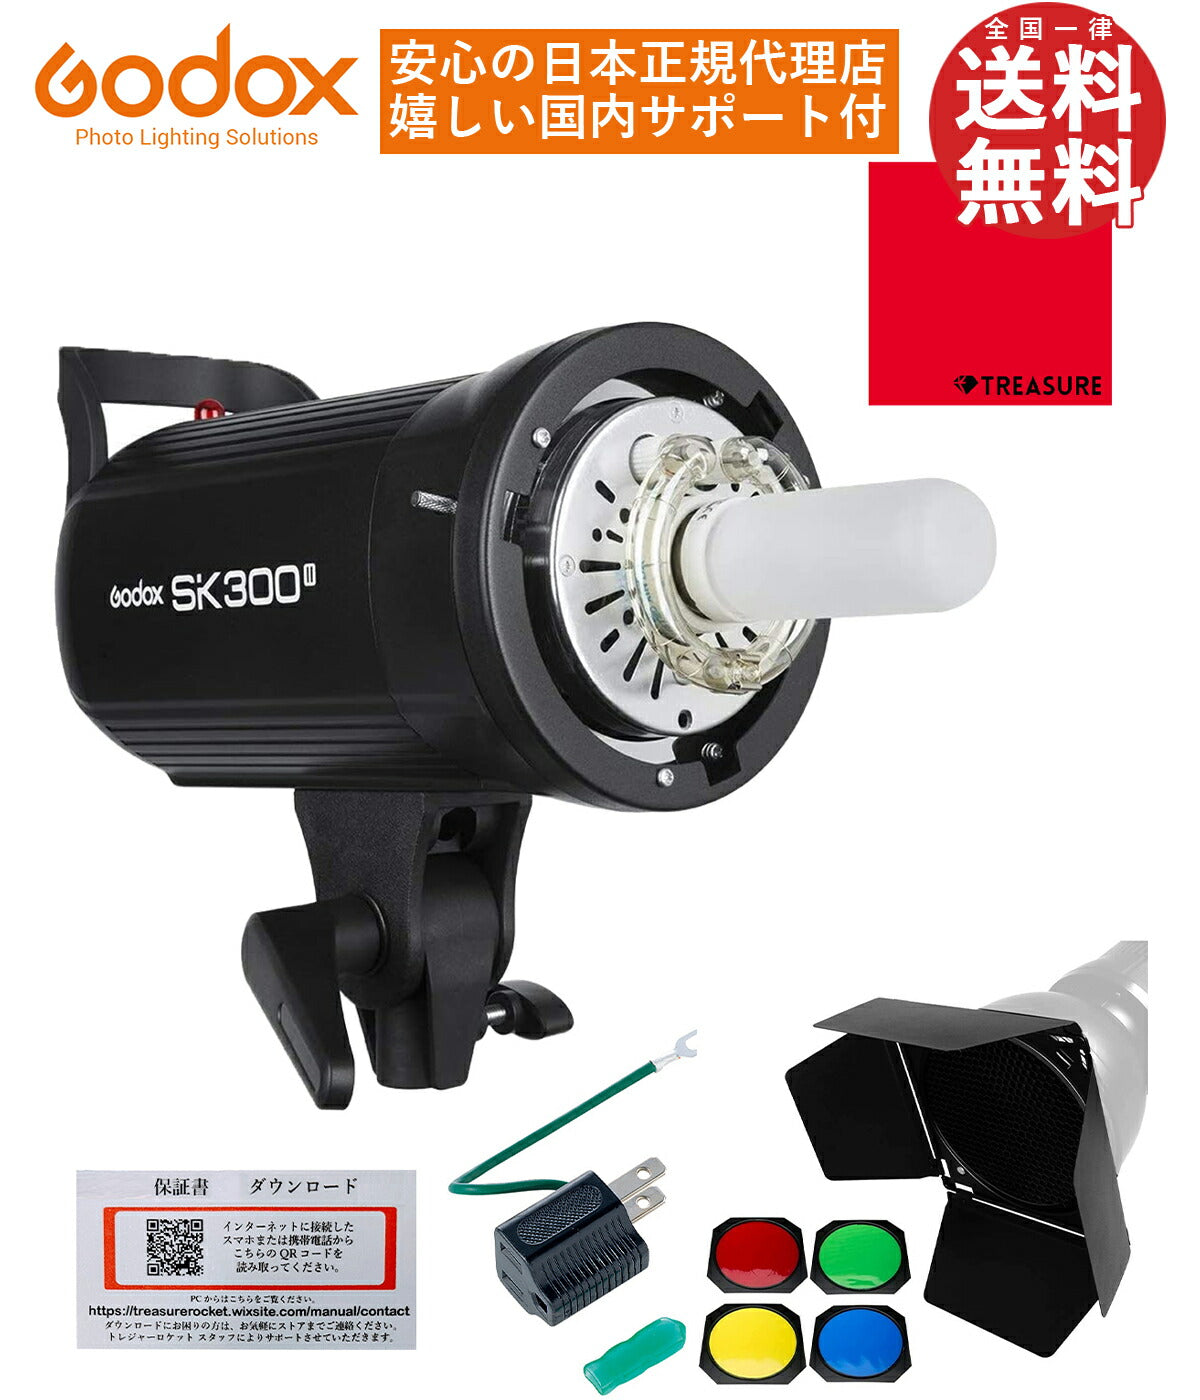 Godox SK300II モノブロックストロボ【美品】